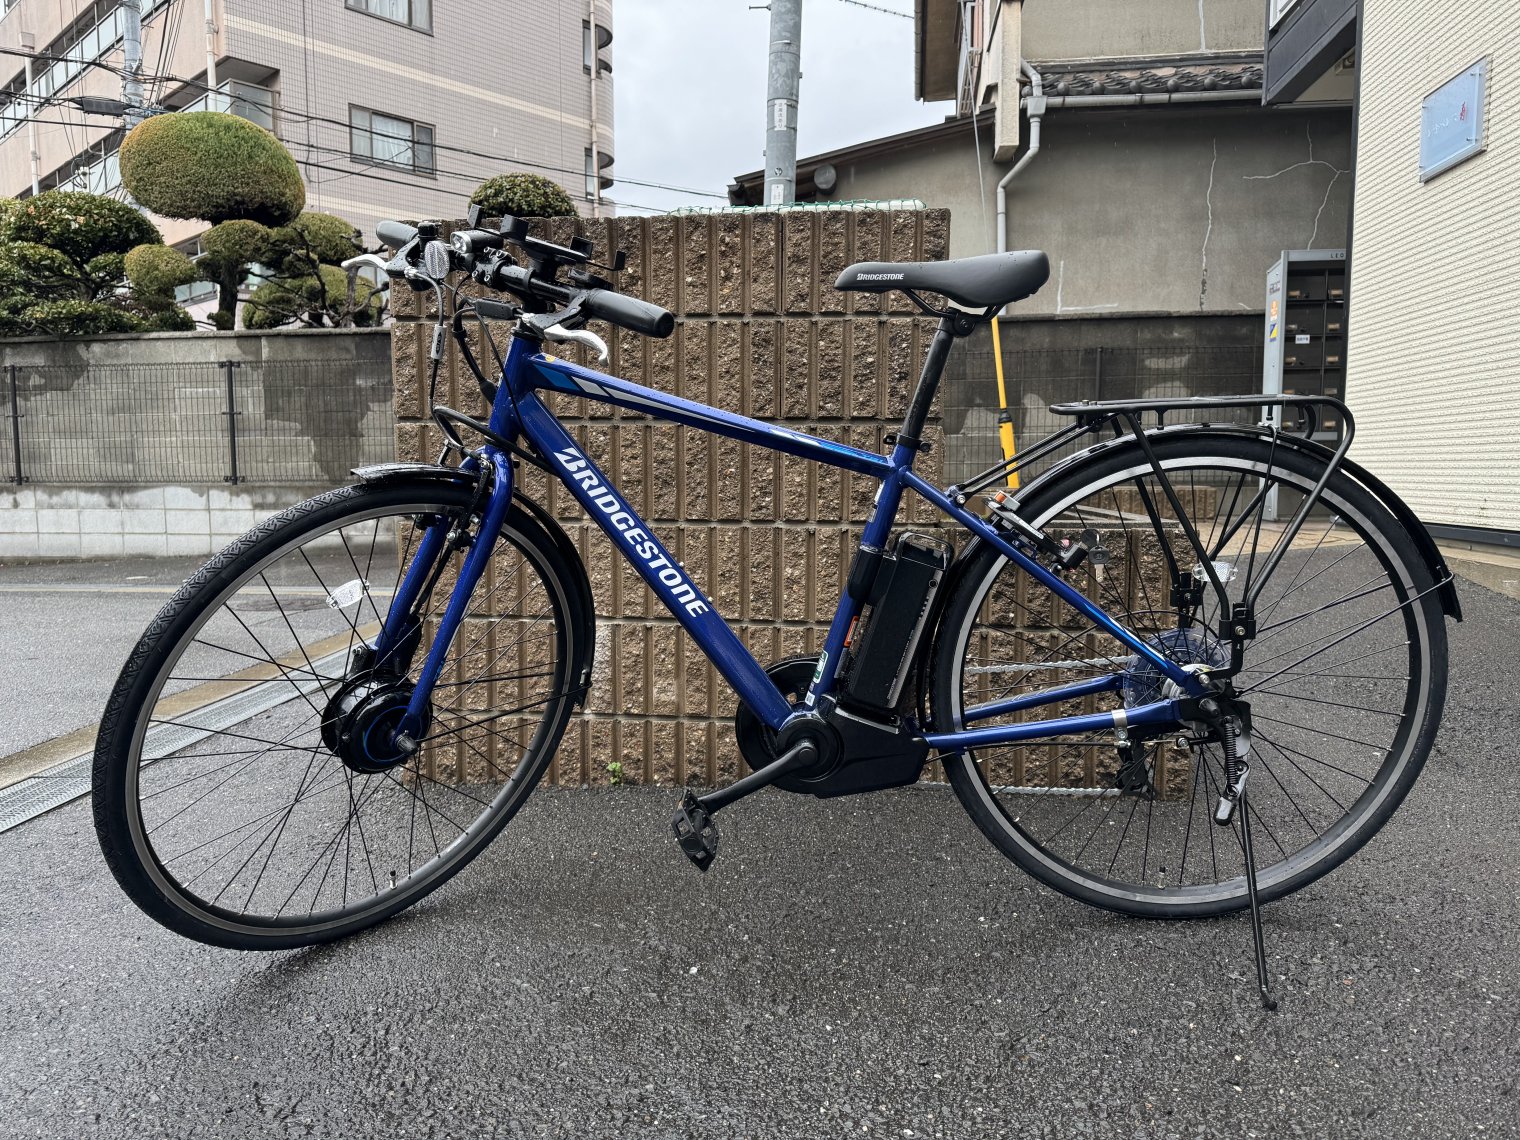 A Bridgestone TB1-e e-bicycle, in ocean blue.